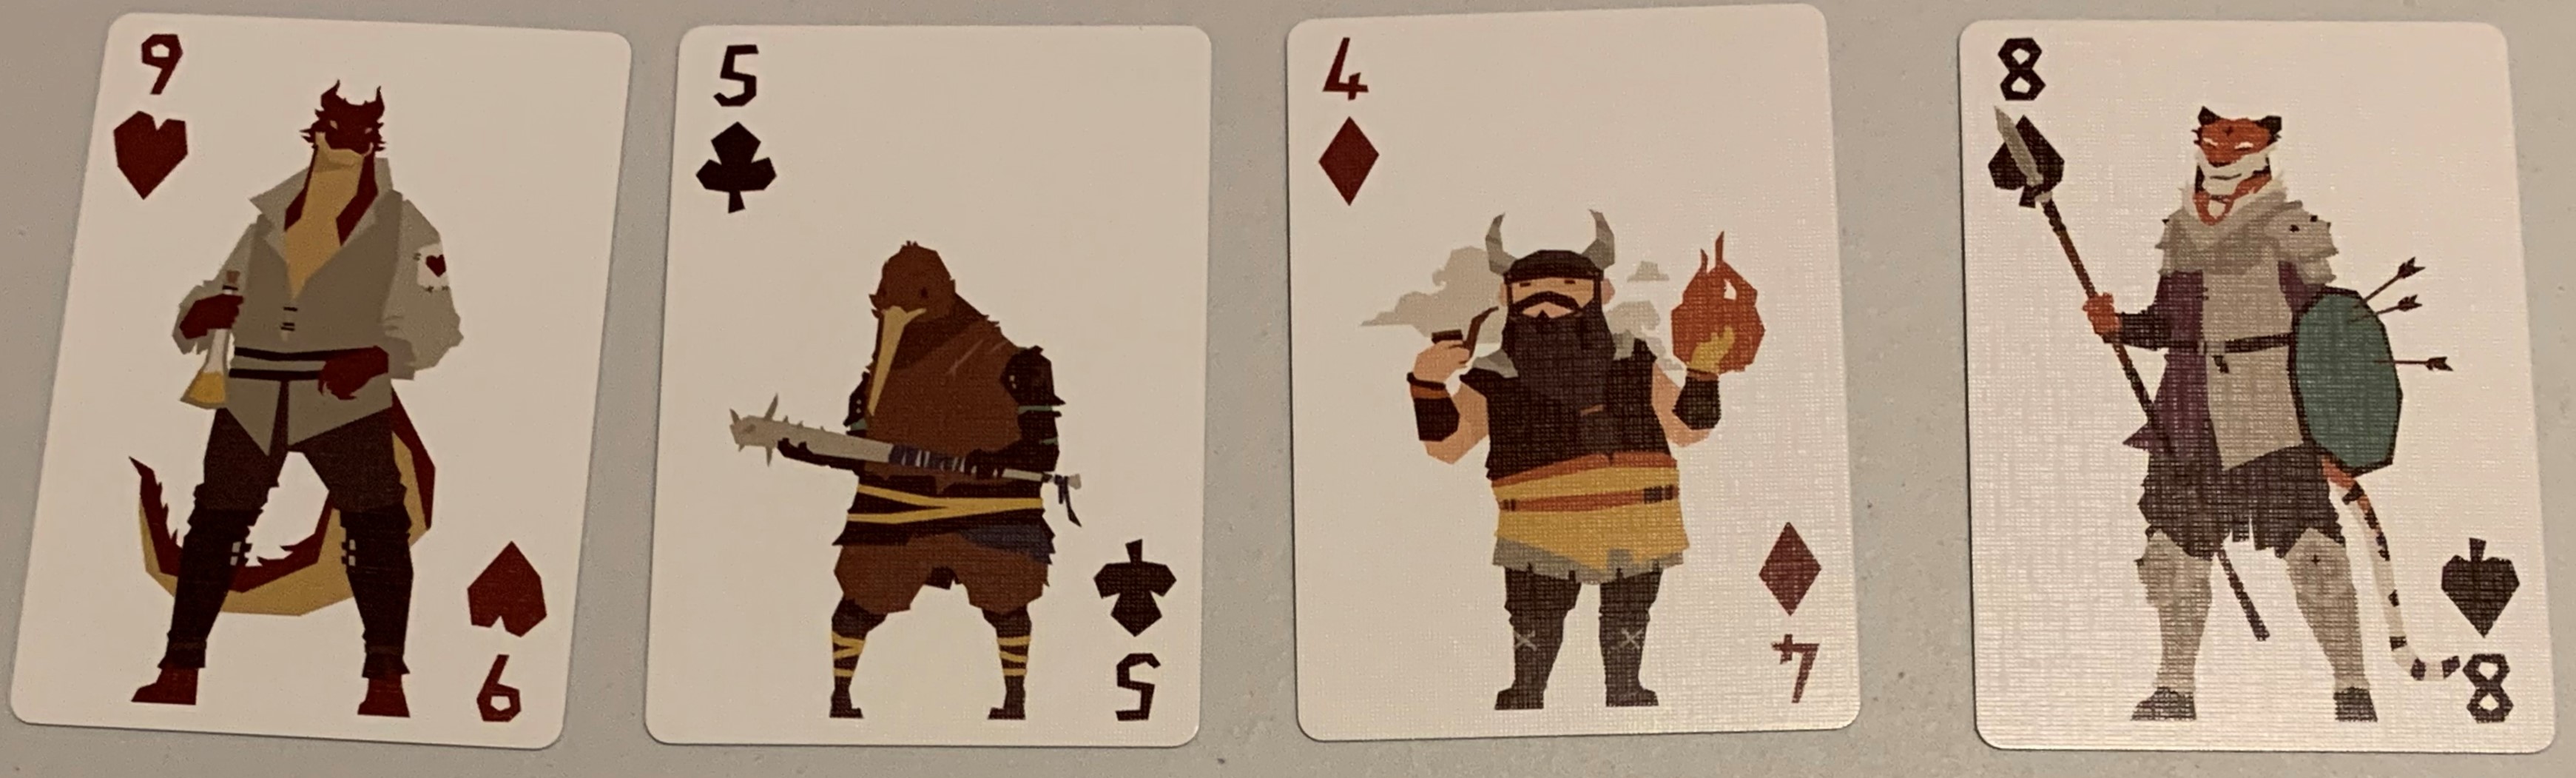 cards 1